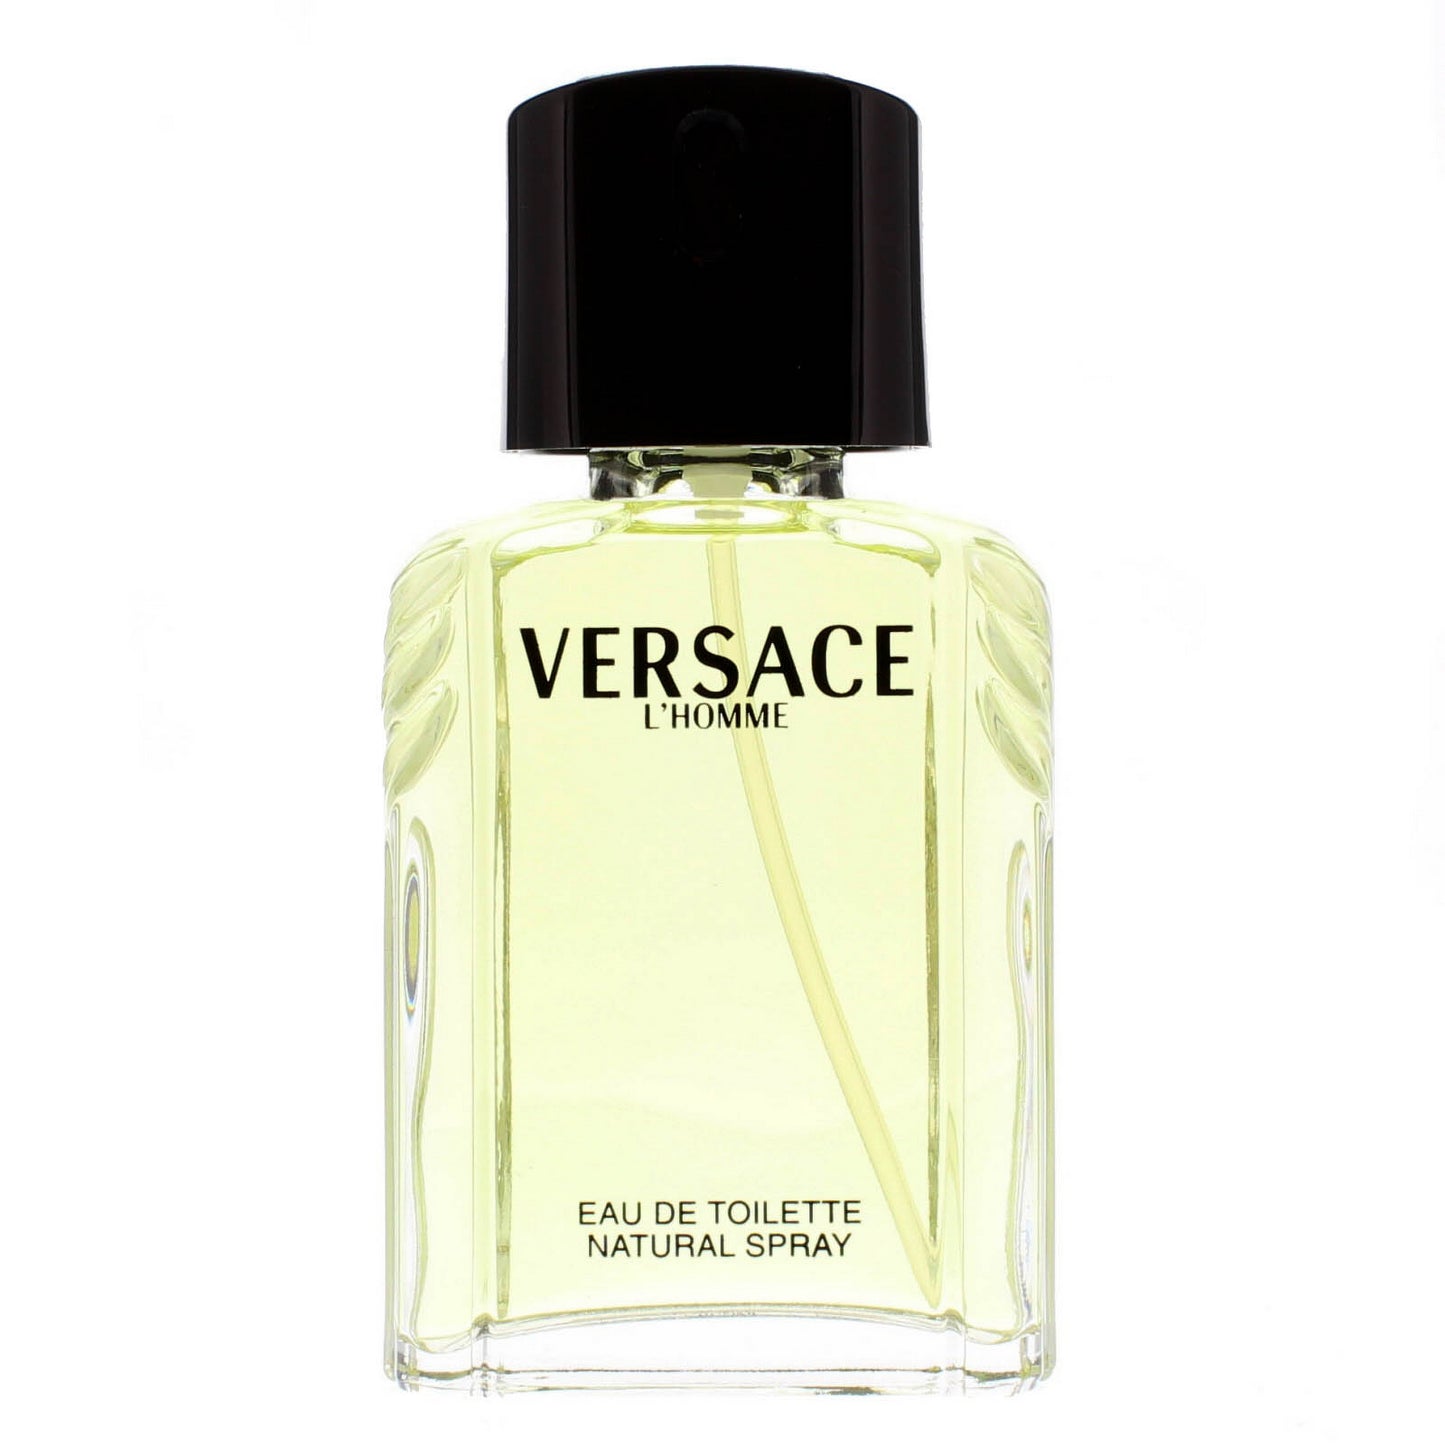 Versace - L'Homme EDT 100ml